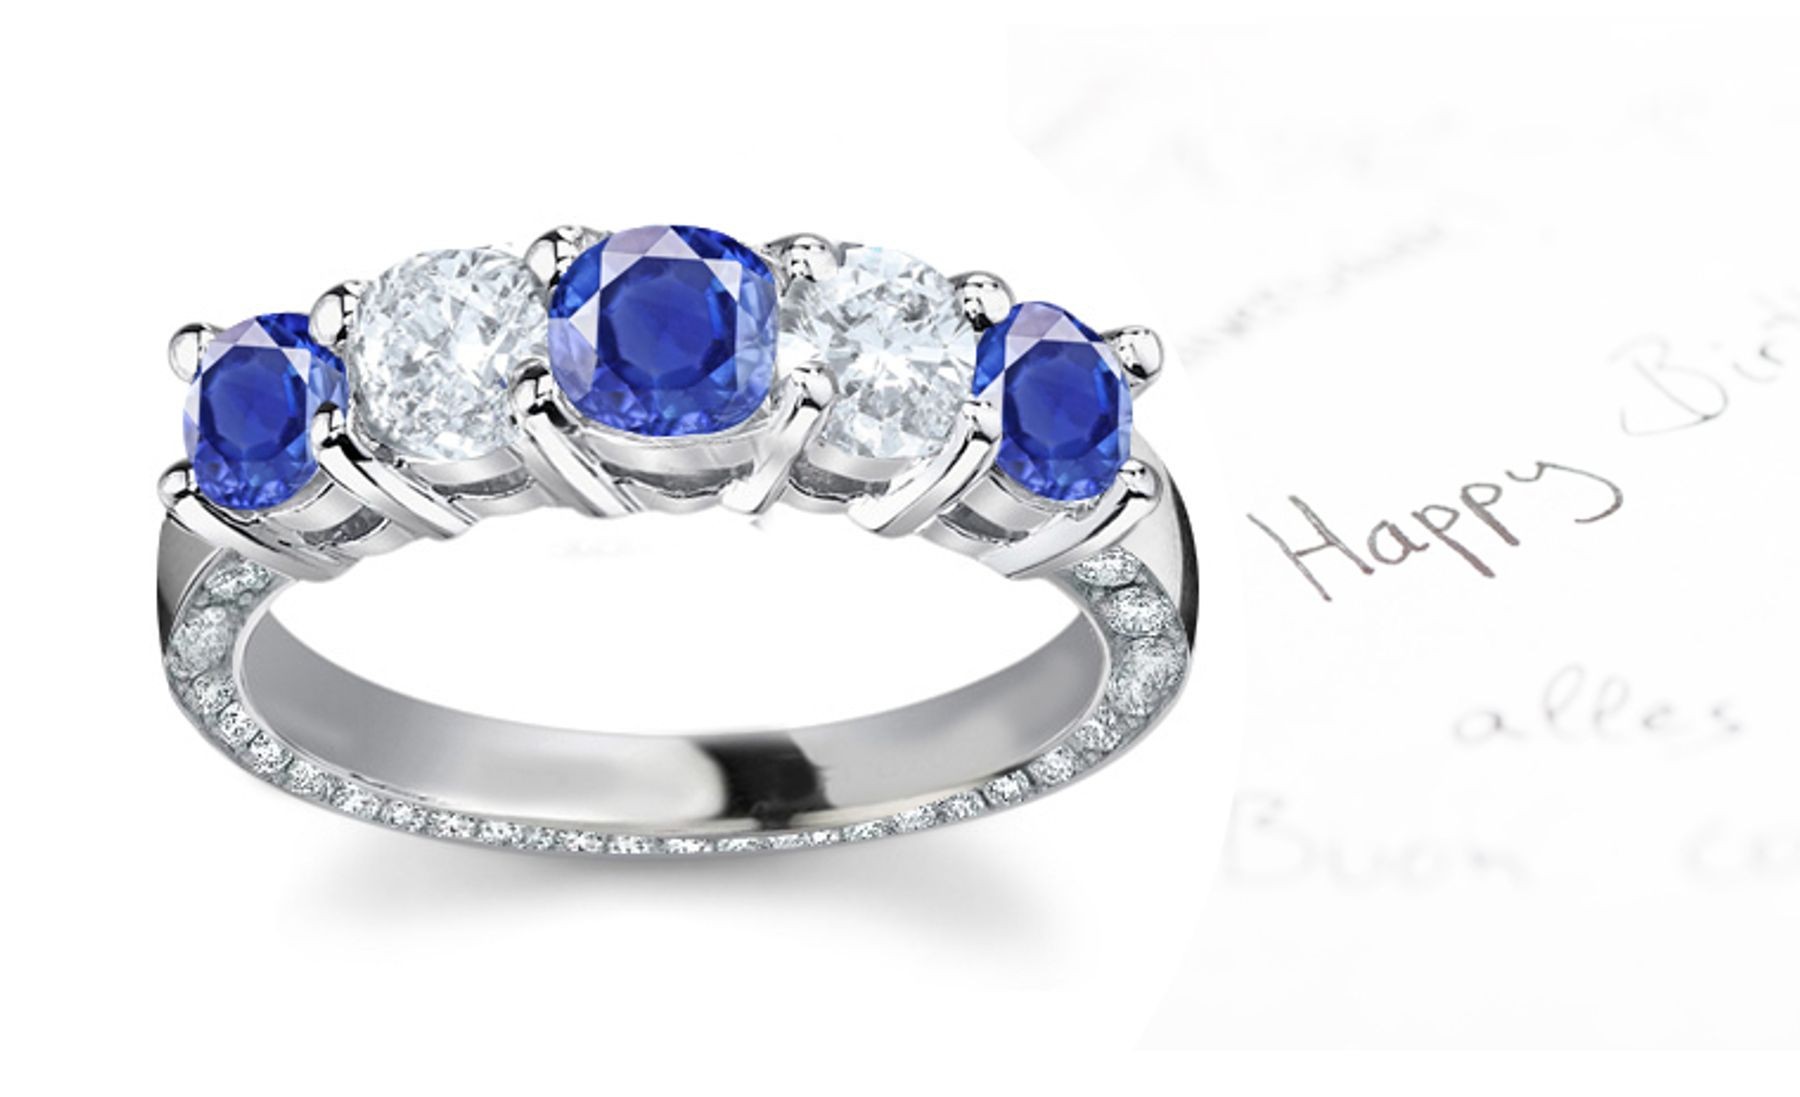 Blue Sapphire & White Diamond Anniversary Rings